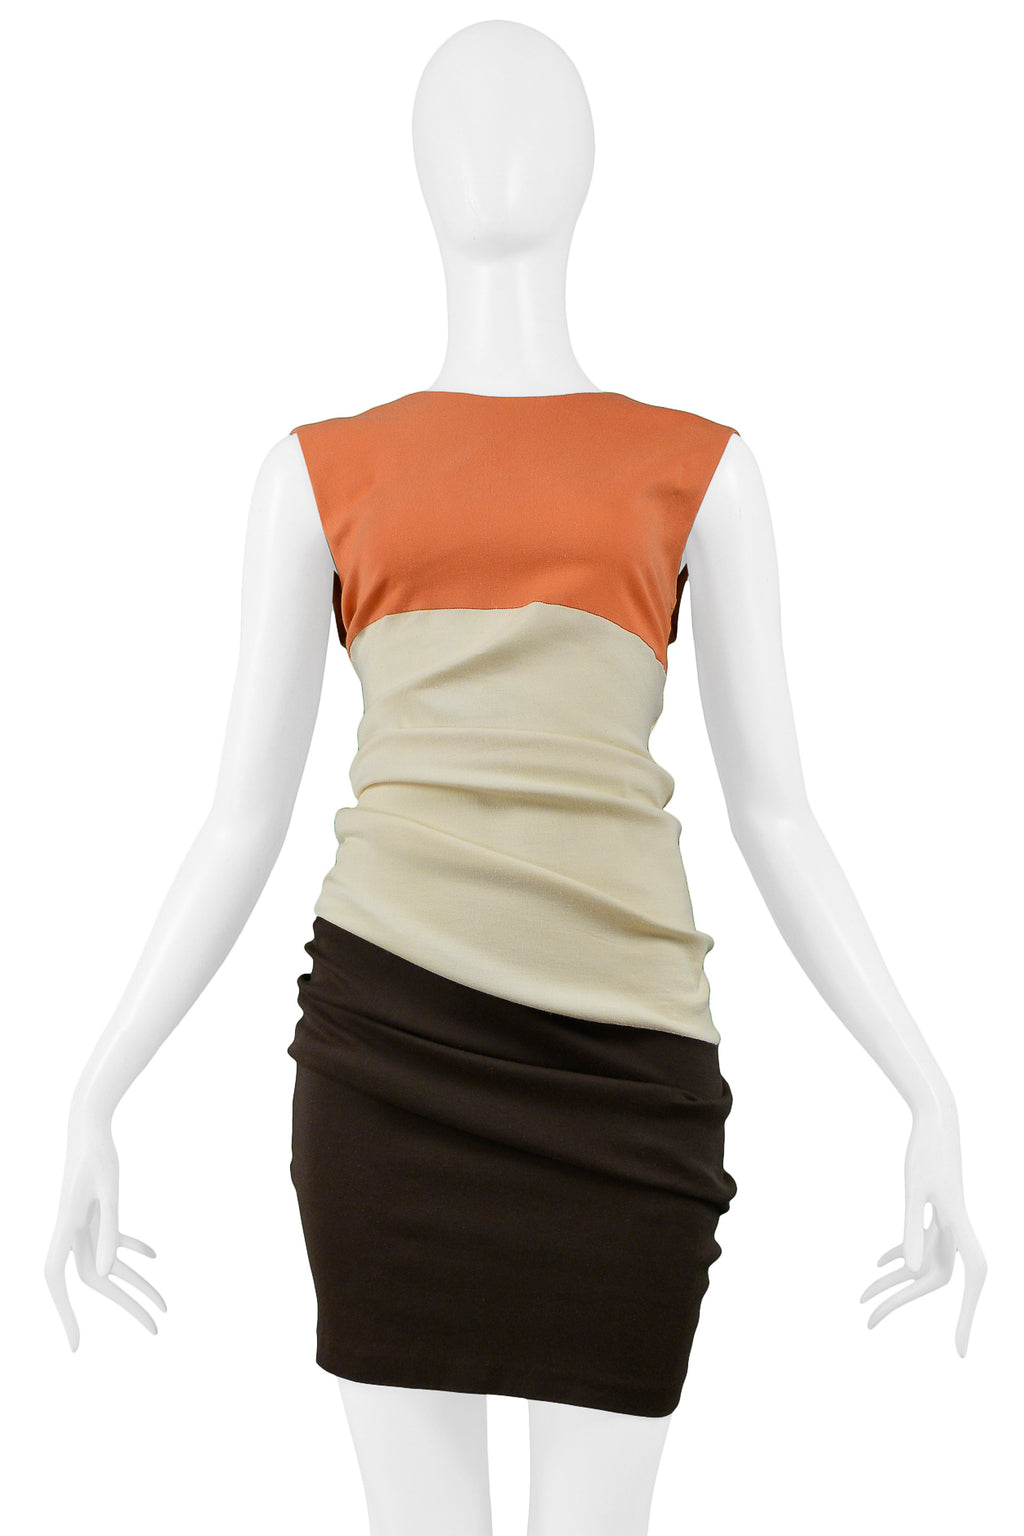 Helmut Lang Coral Ivory & Brown Color Block Knit Dress 1990